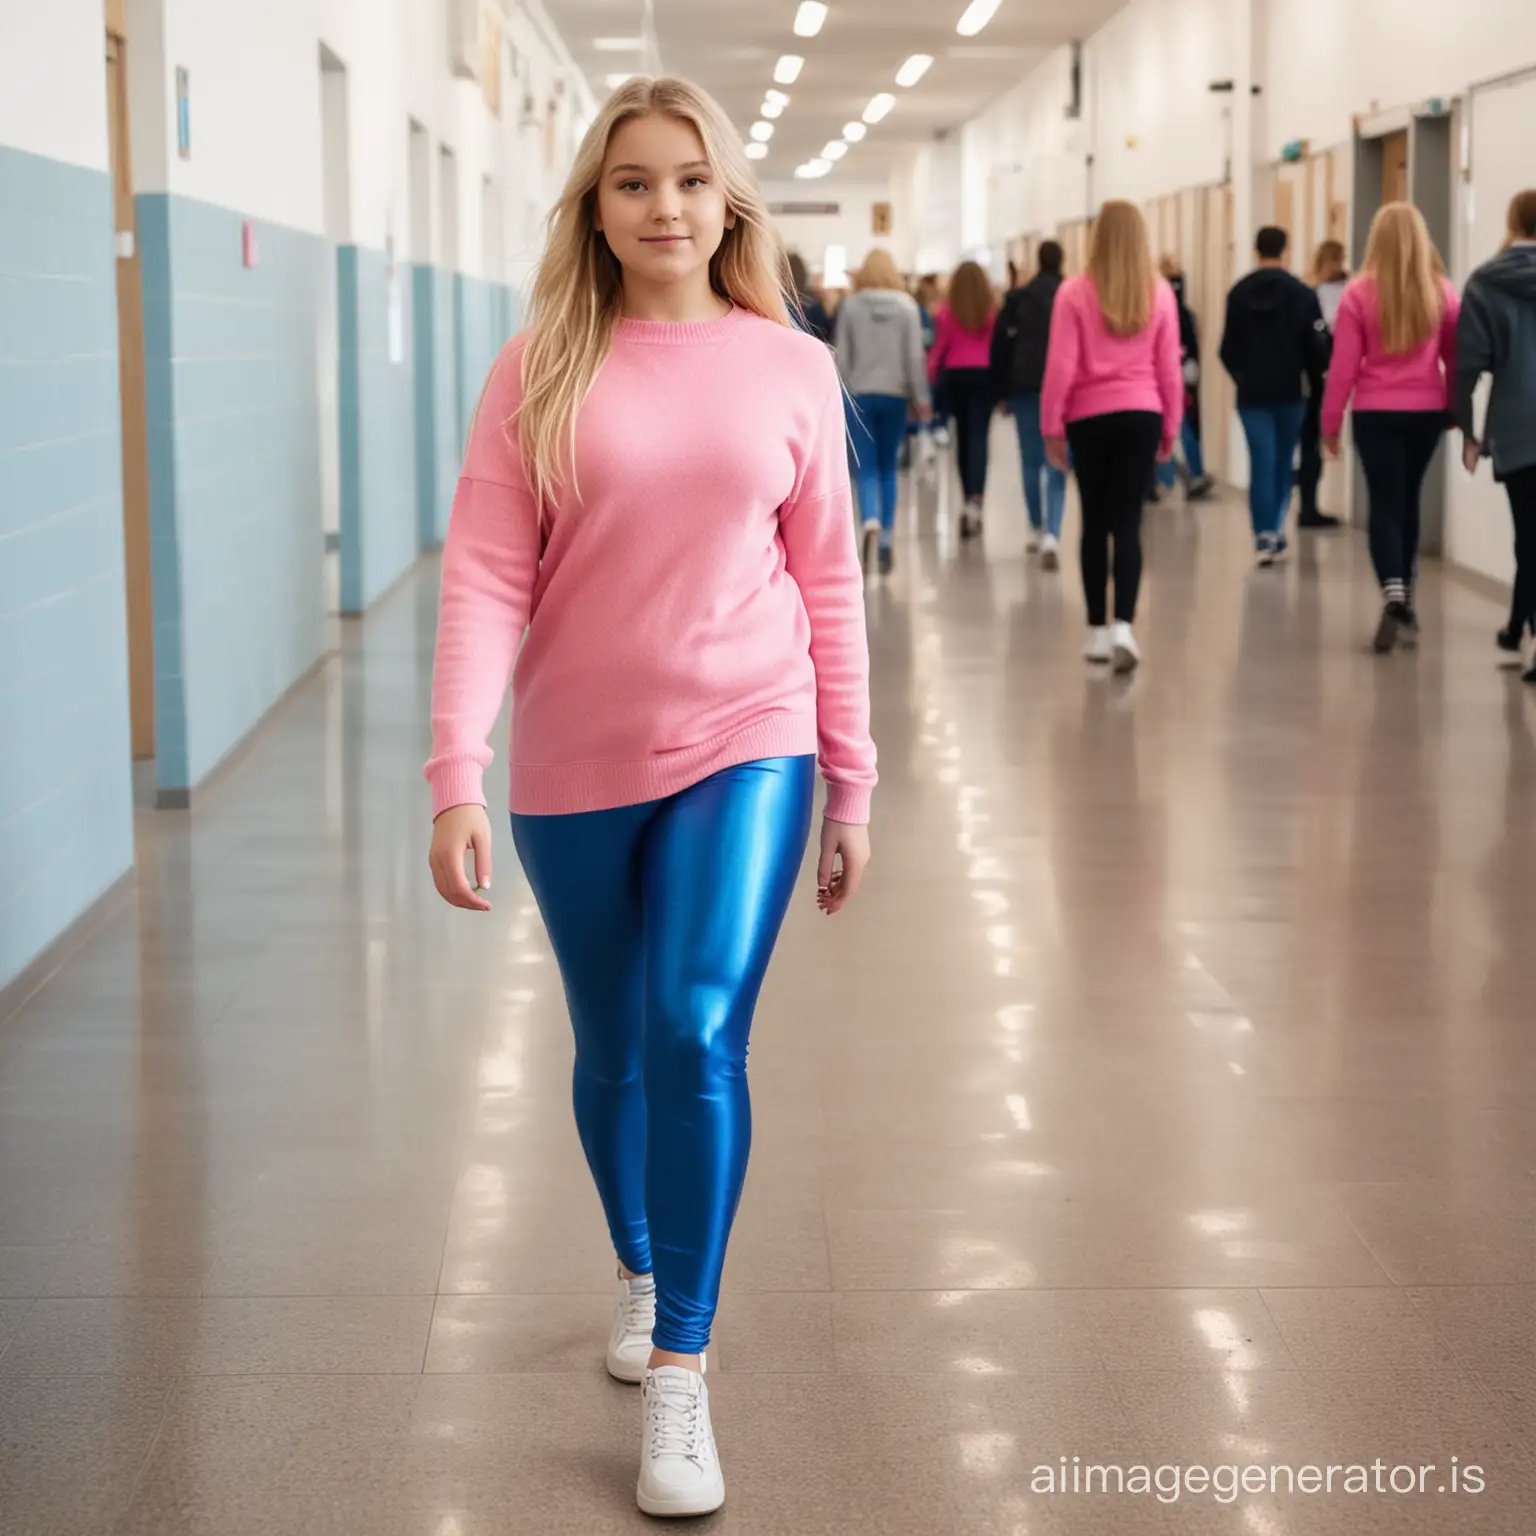 Teenage-Girl-in-Shiny-Blue-Leggings-and-Pink-Blue-Sweater-Walking-in-Crowded-School-Hallway